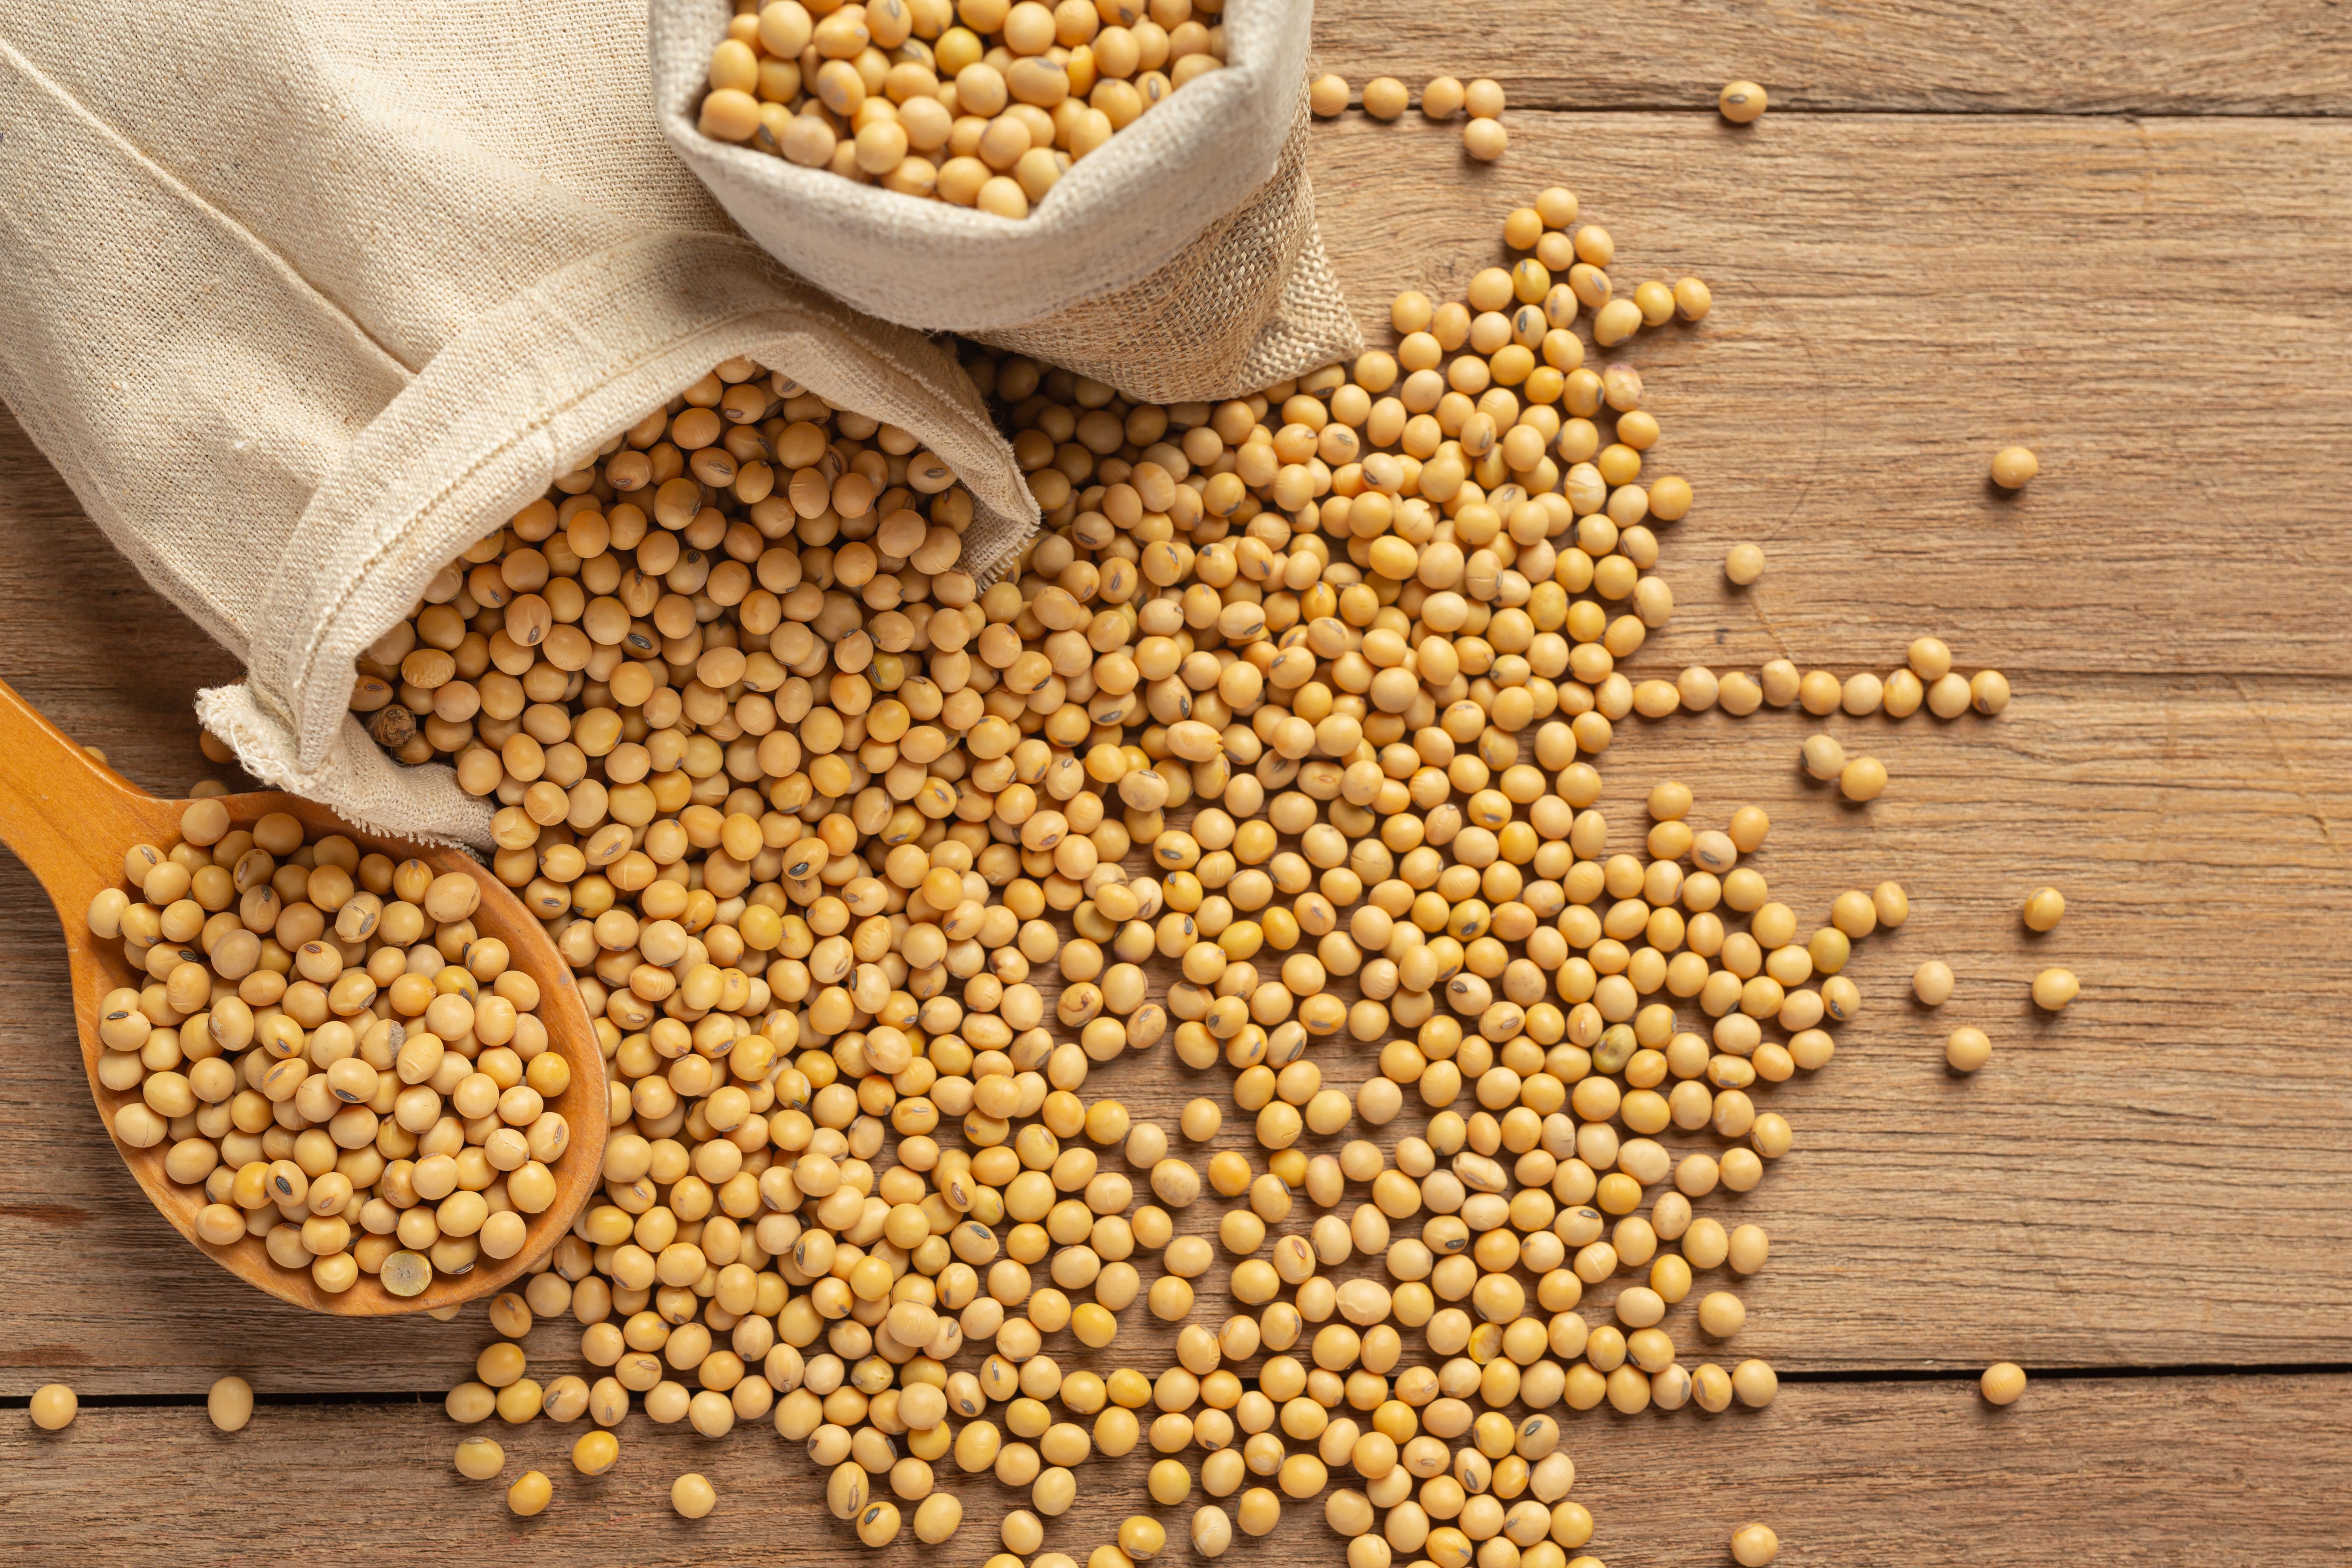 soybean-seeds-on-wooden-floor-and-hemp-sacks-food-nutrition-concept